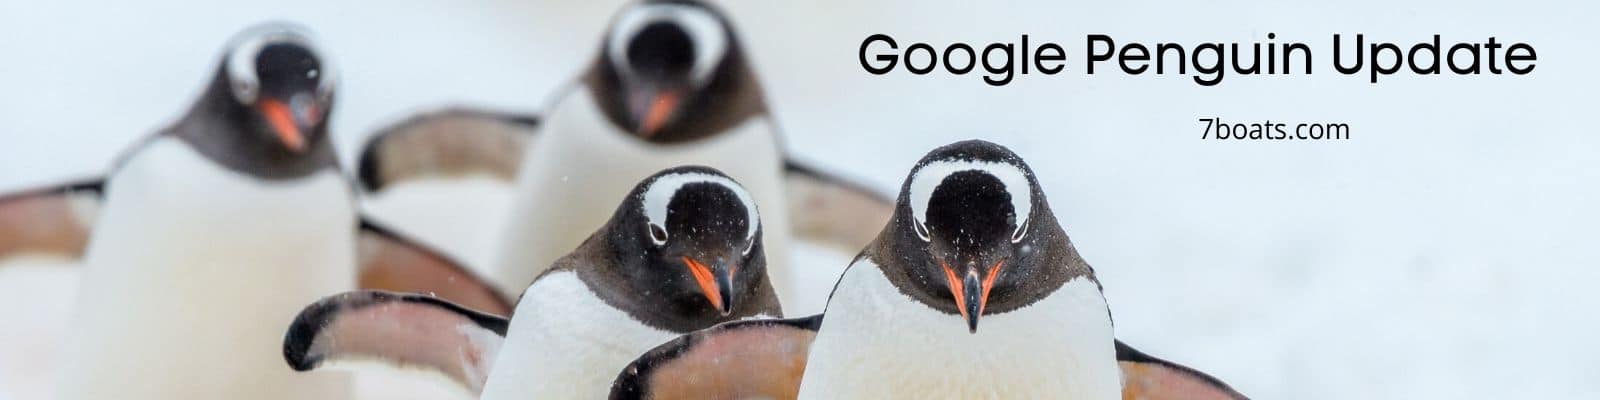 Google Penguin Update Tips